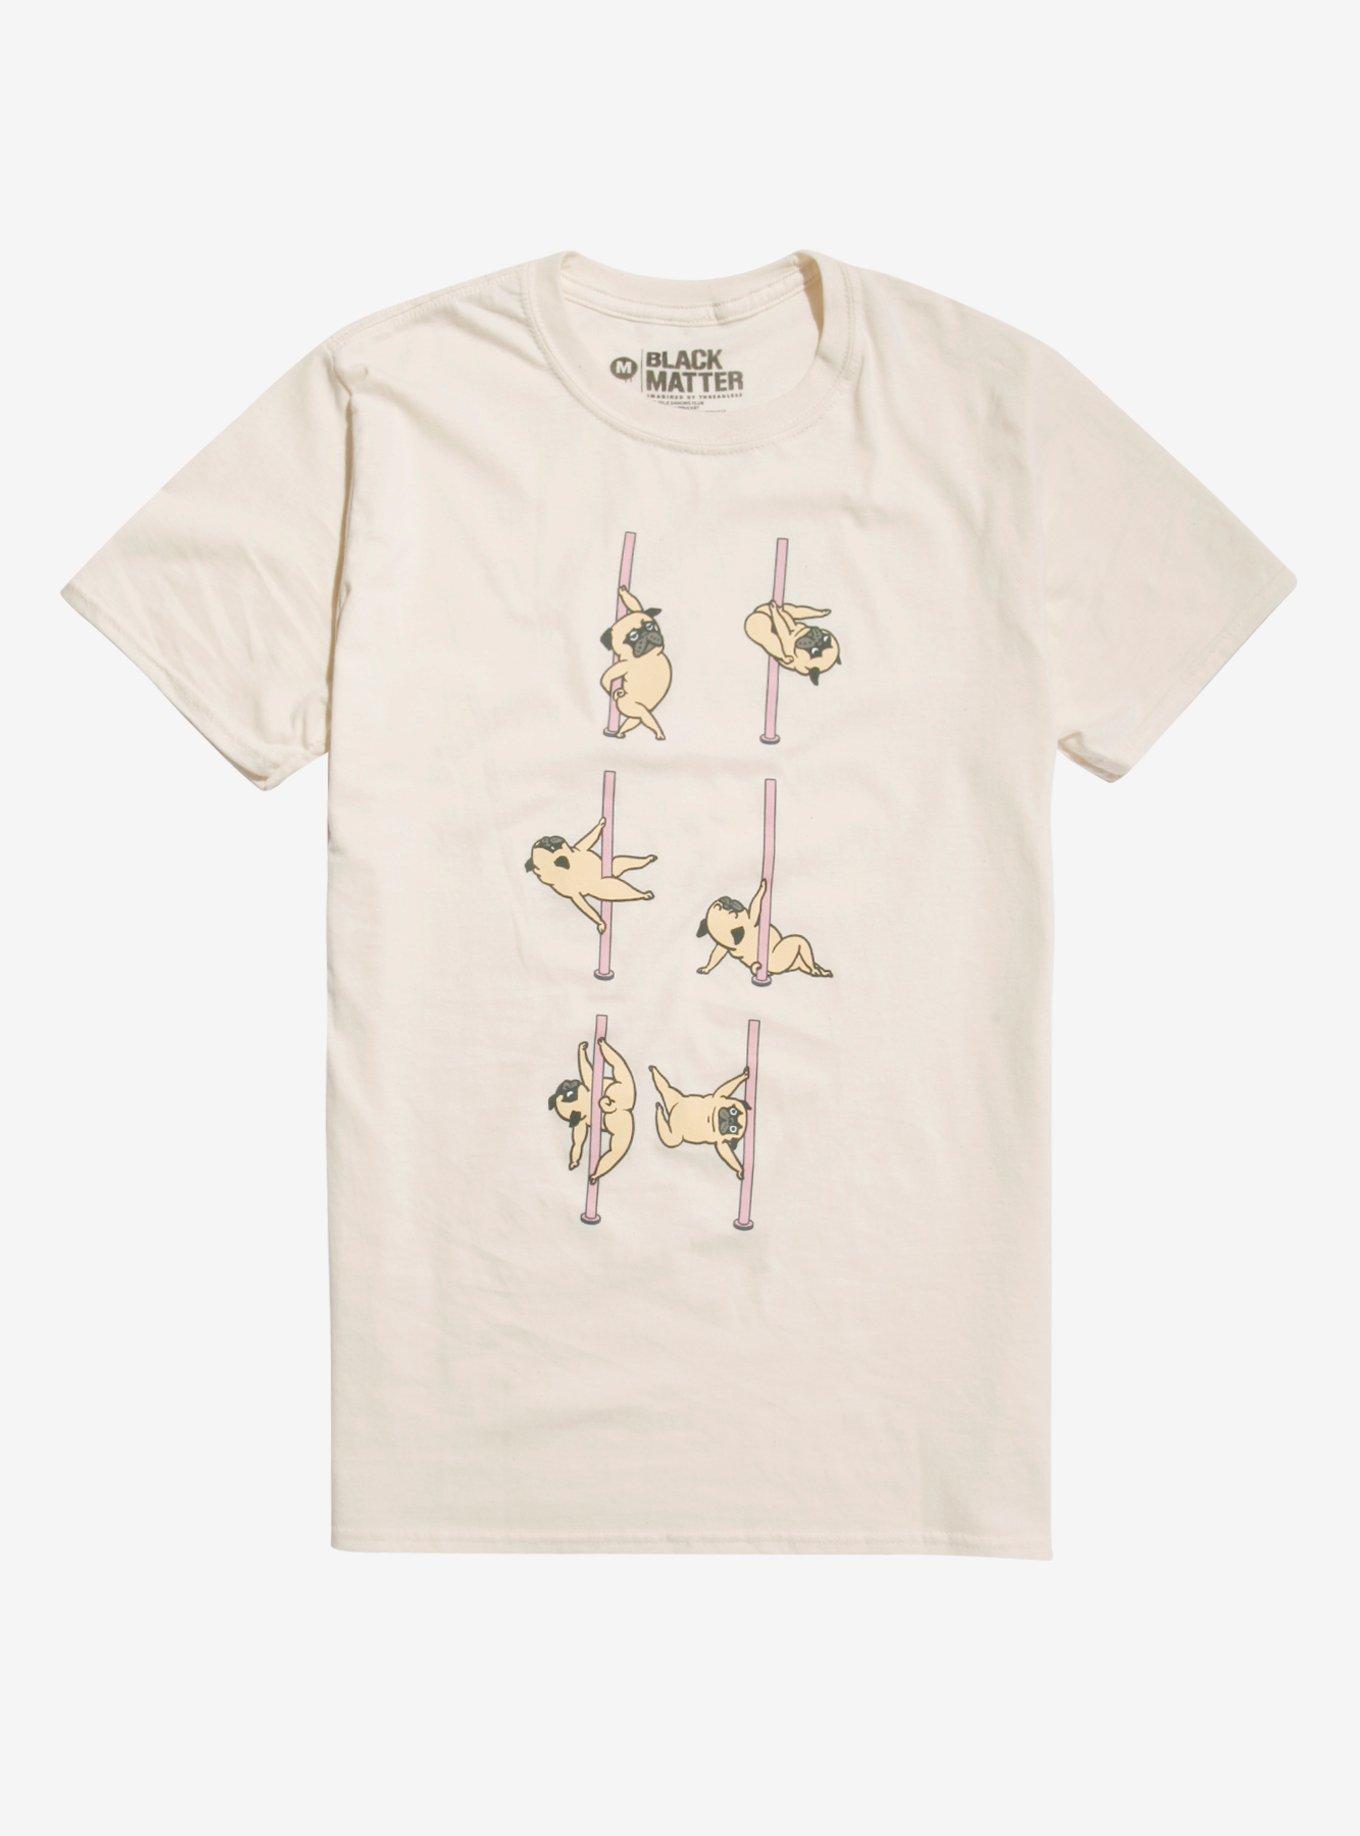 Pug Pole-Dancing Club T-Shirt | Hot Topic